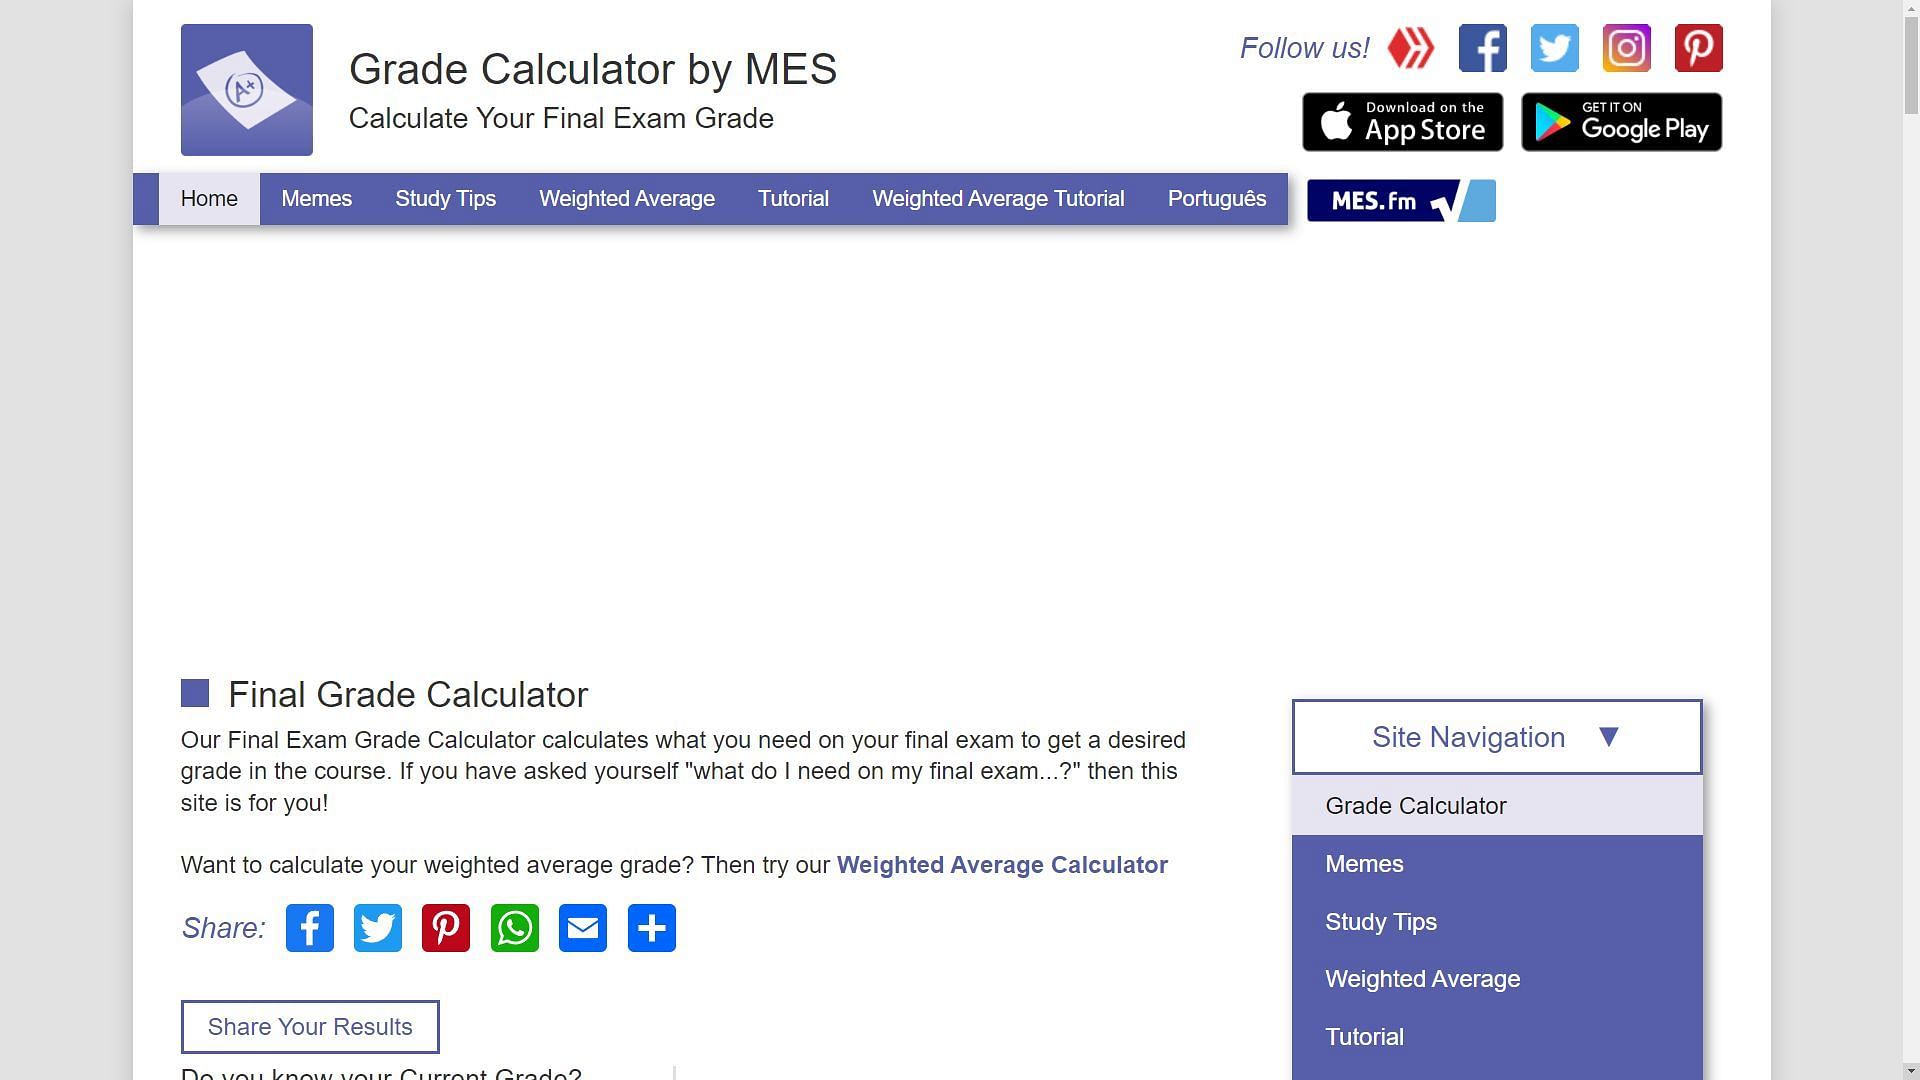 Grade Calculator website (Image by Sportskeeda)